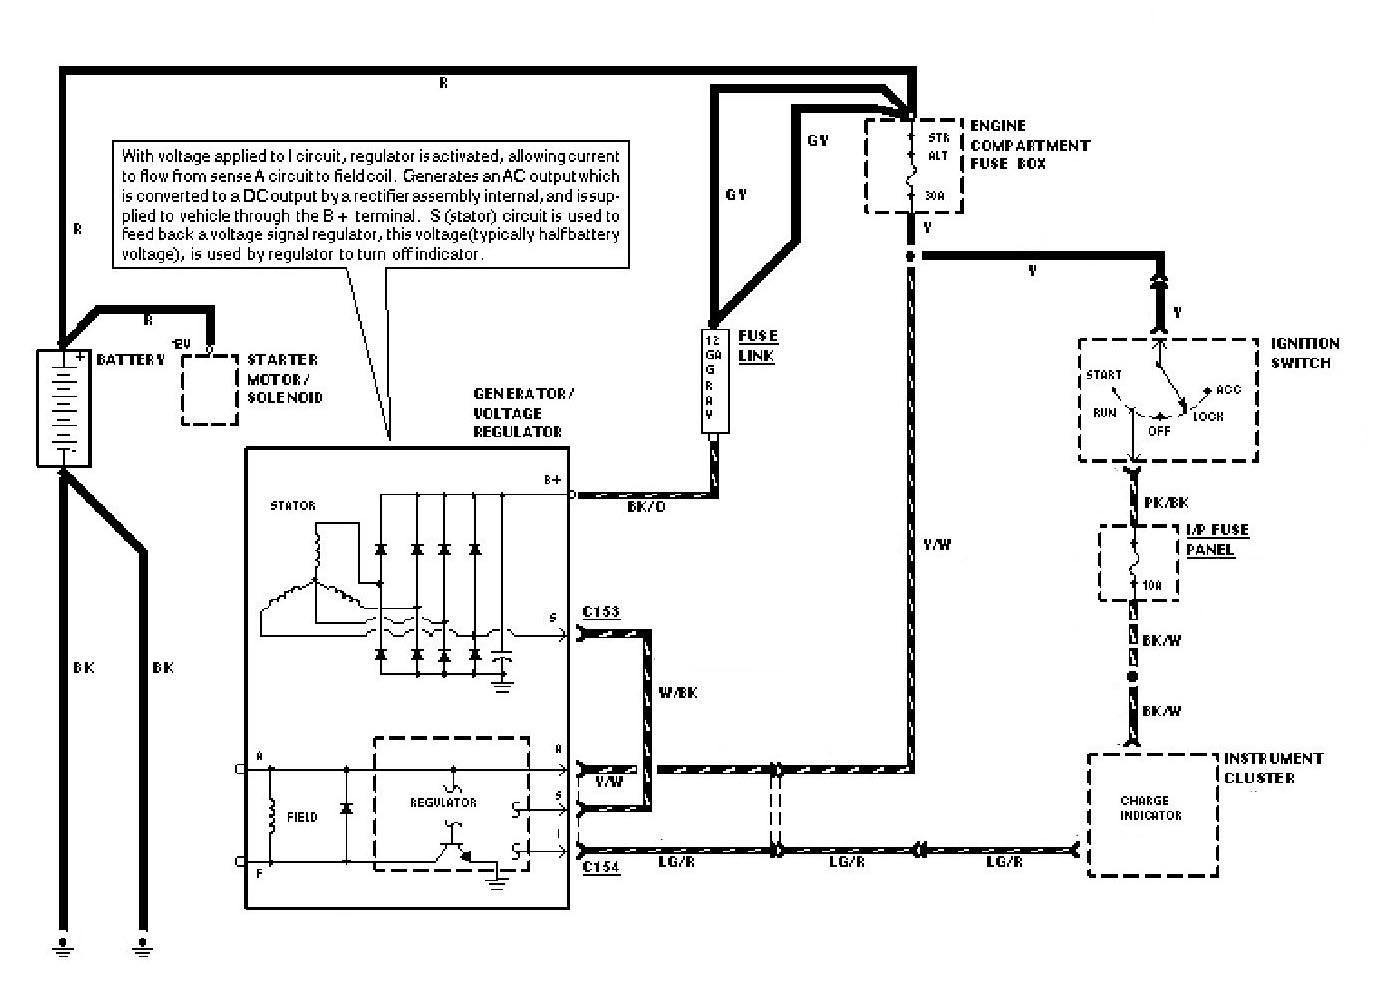 Internal Alternator Regulator Wiring Diagram | Wiring Library - Ford Alternator Wiring Diagram Internal Regulator